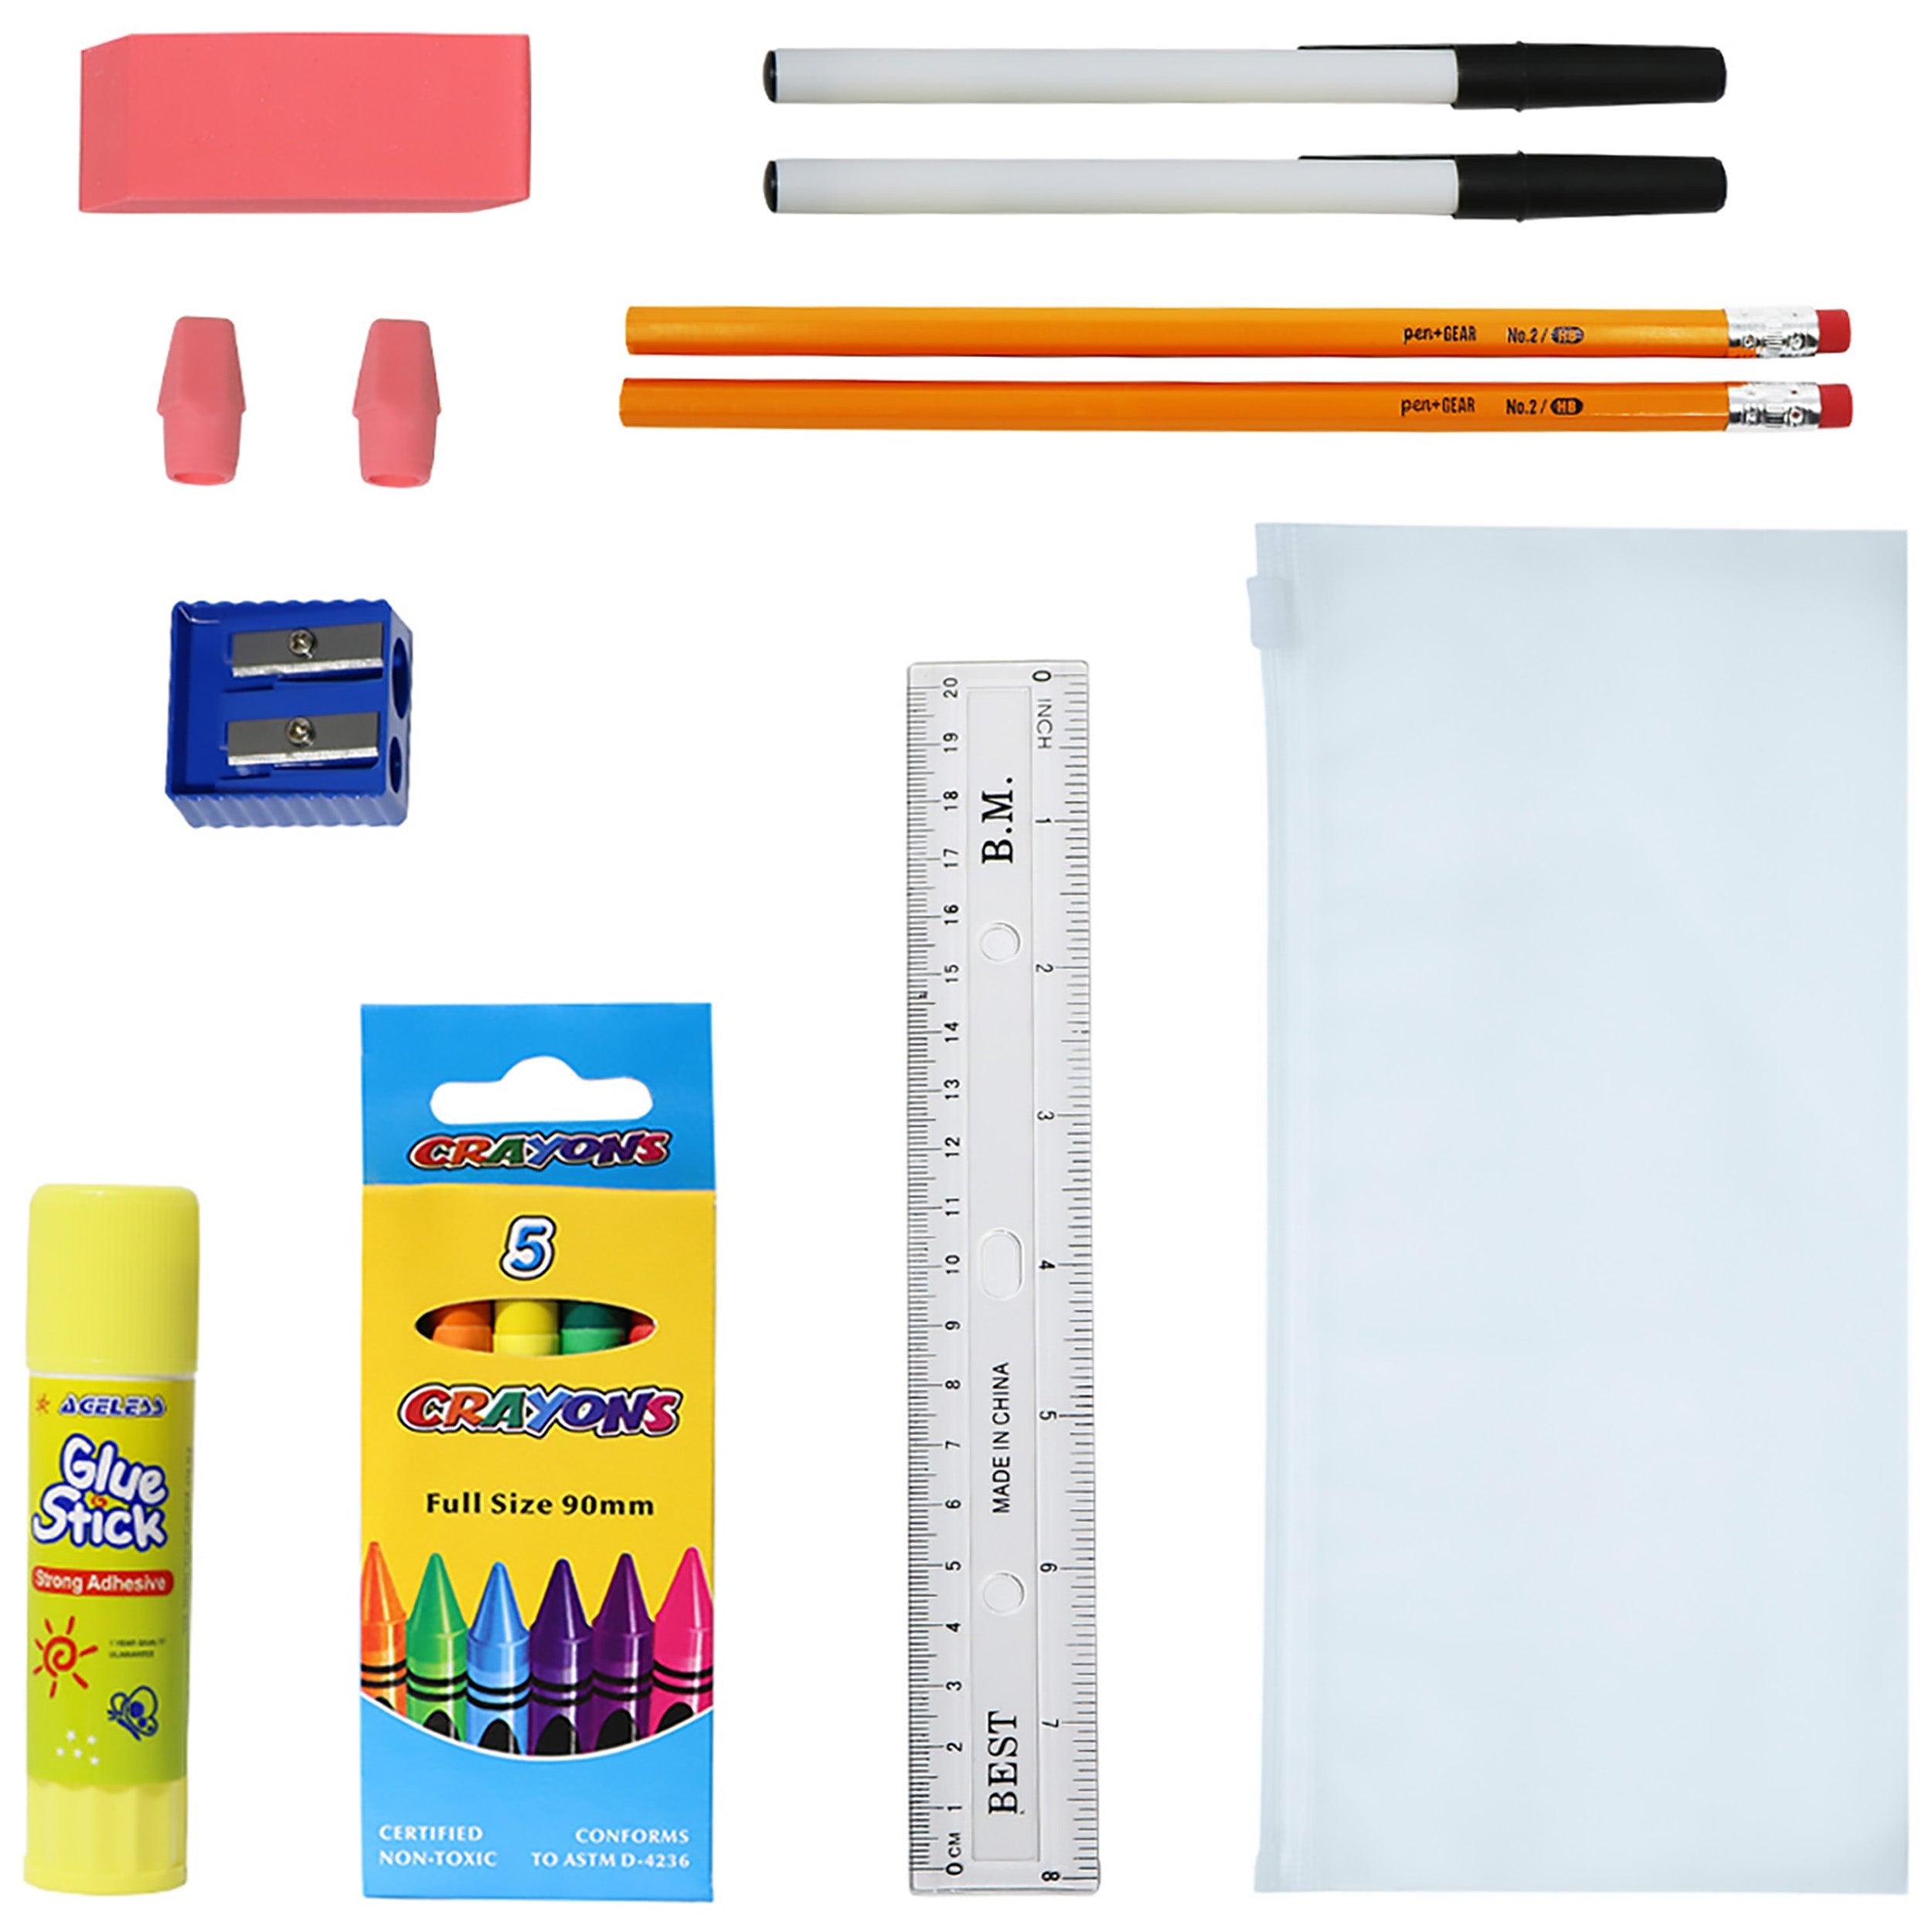 12 Black 17" Basic Kids Wholesale Backpacks and 12 Bulk School Supply Kits of Your Choice